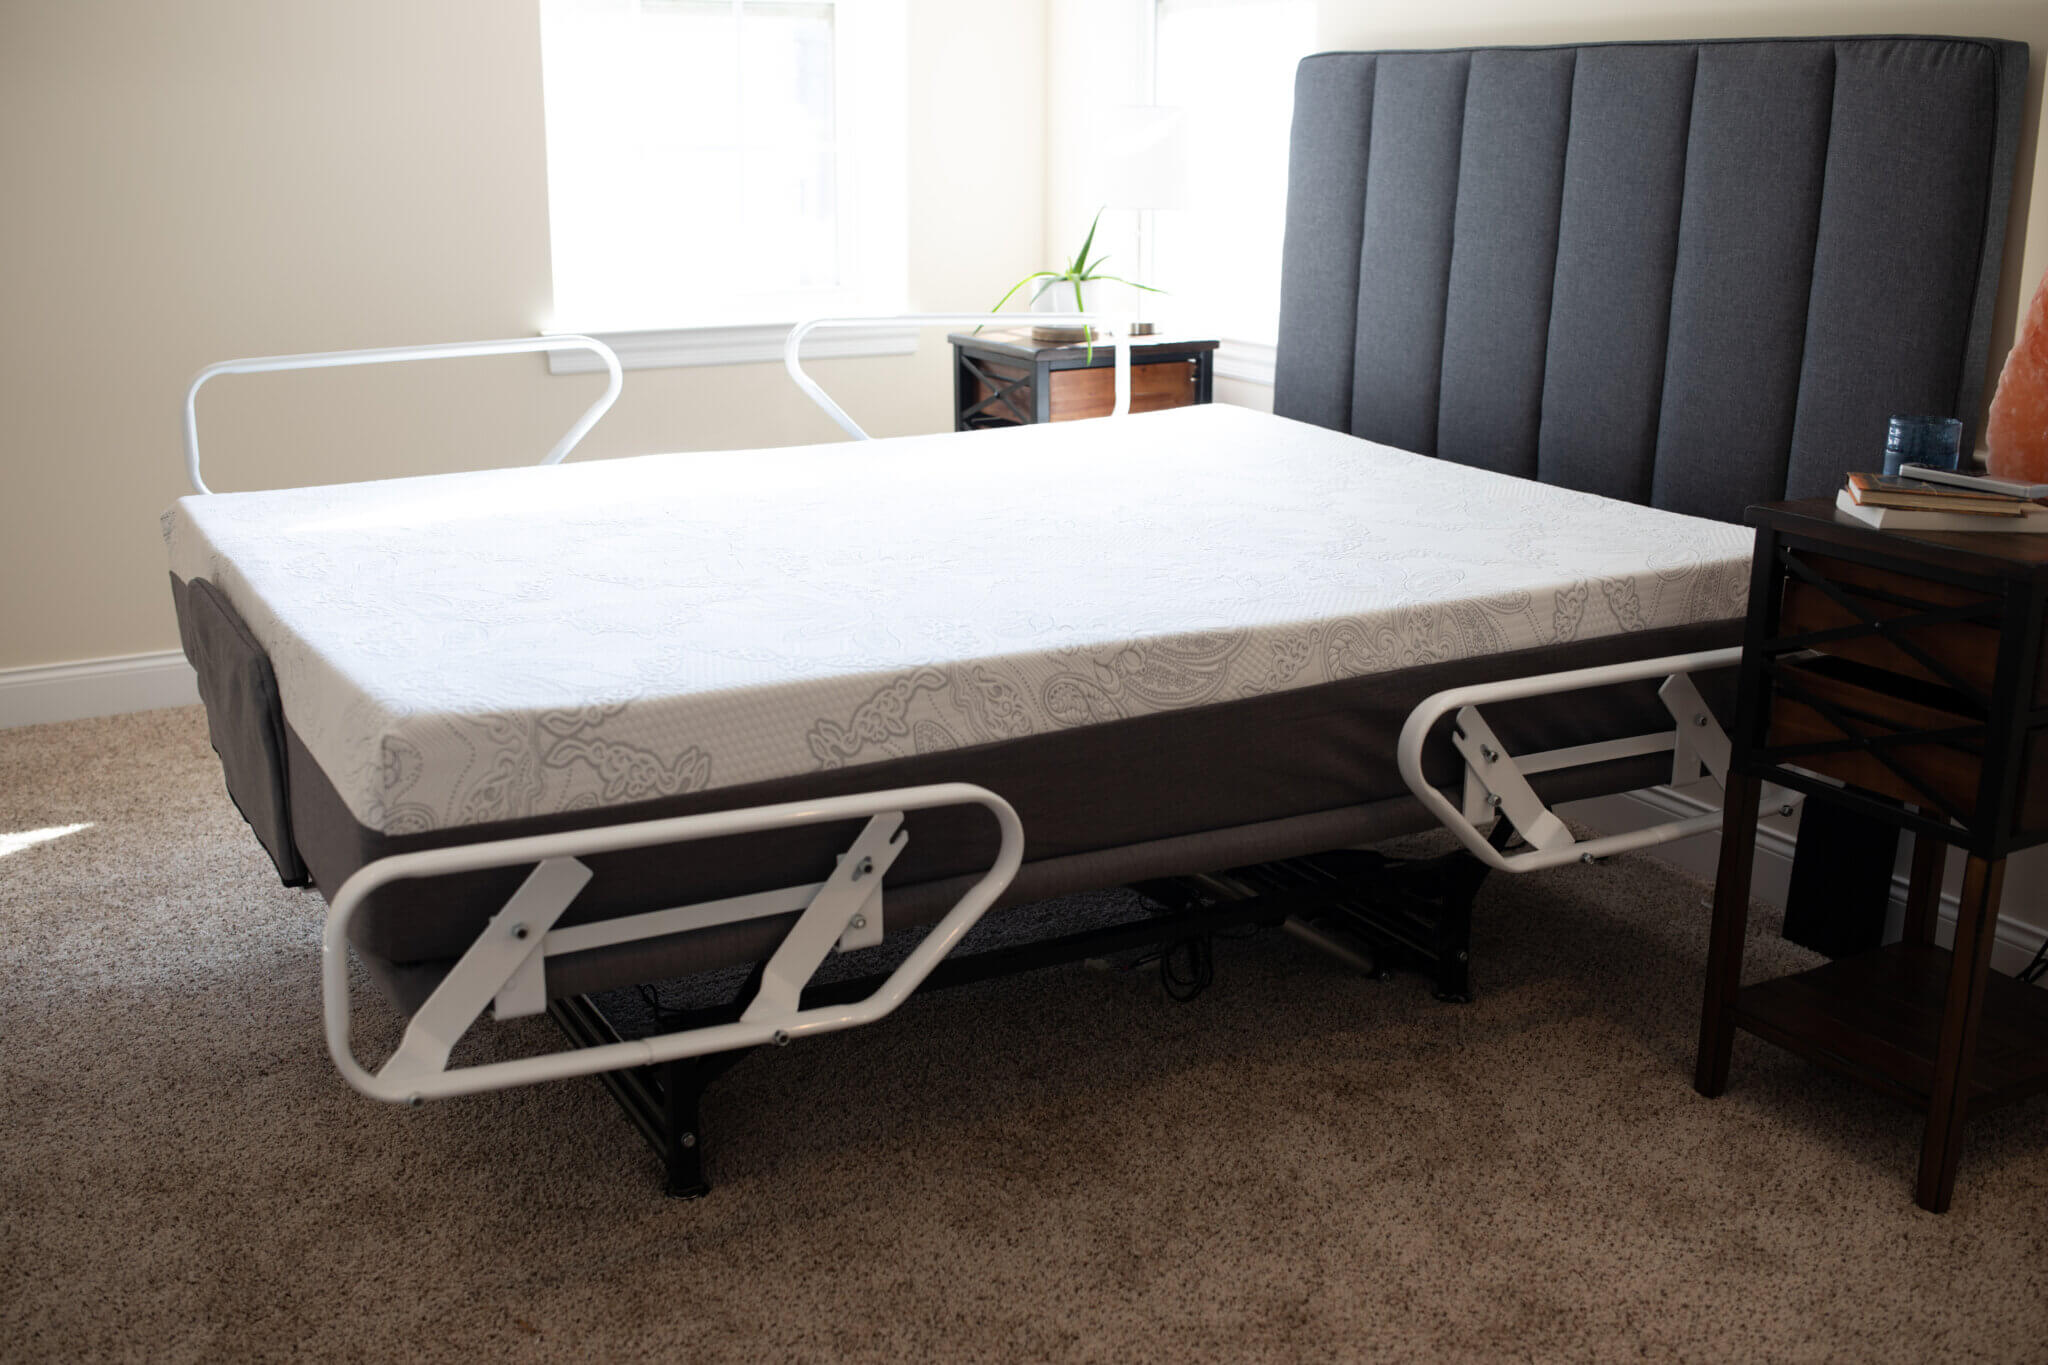 flex a bed adjustable bed mattress